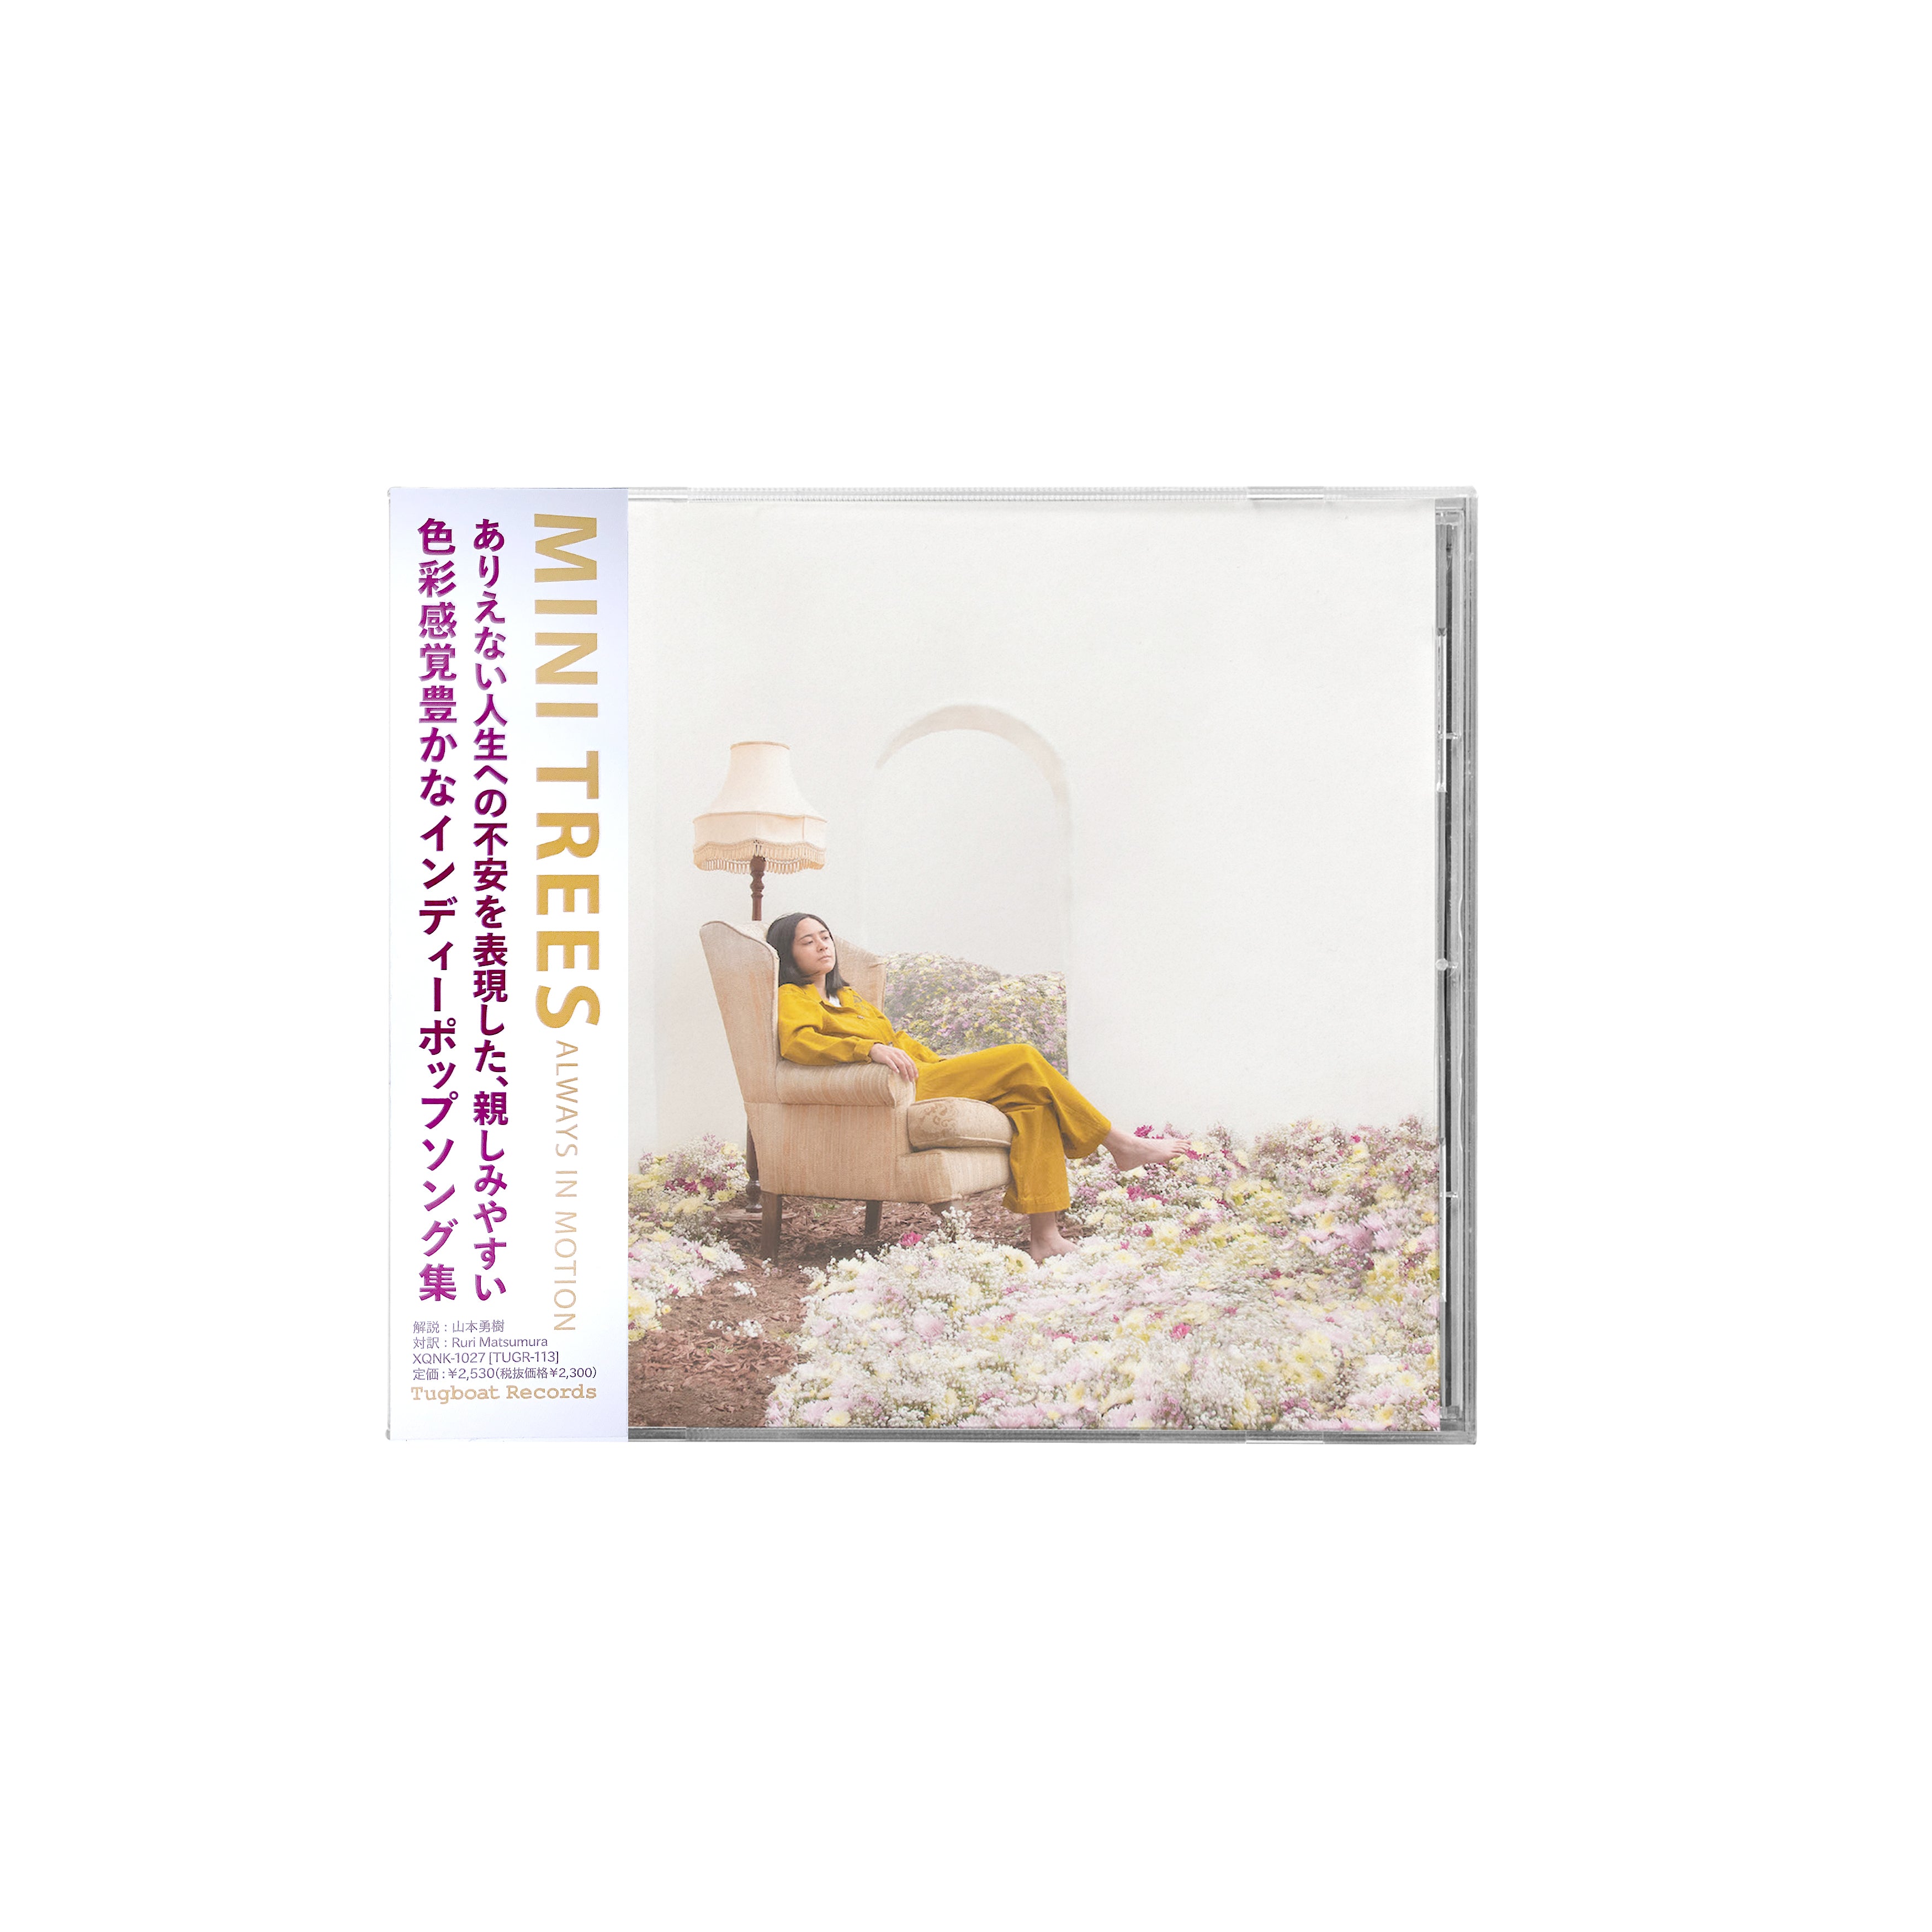 Mini Trees "Always In Motion" Japanese CD